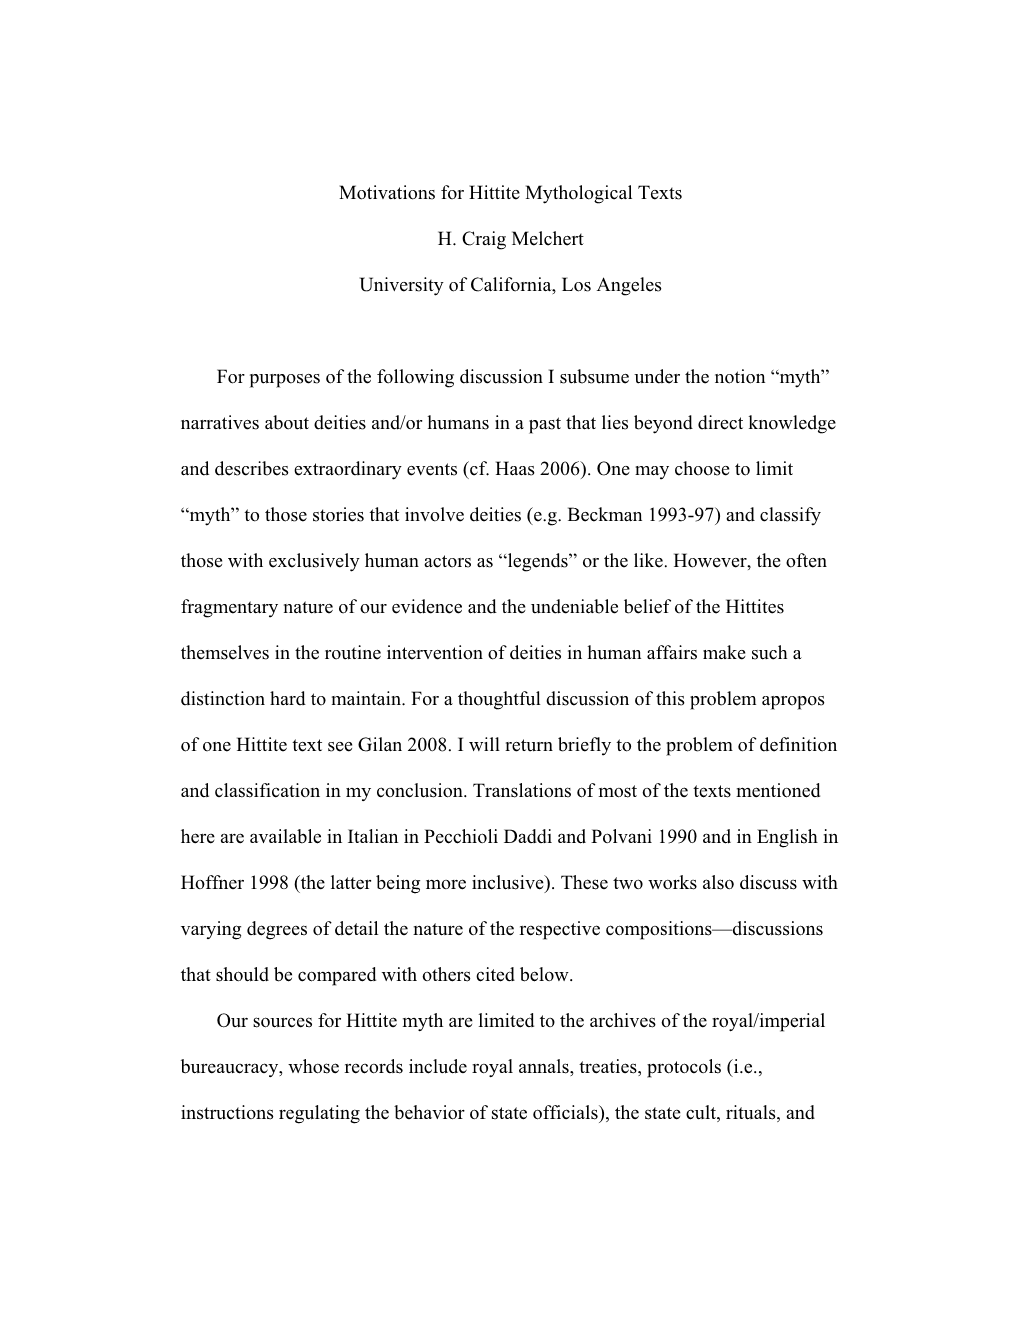 Motivations for Hittite Mythological Texts H. Craig Melchert University